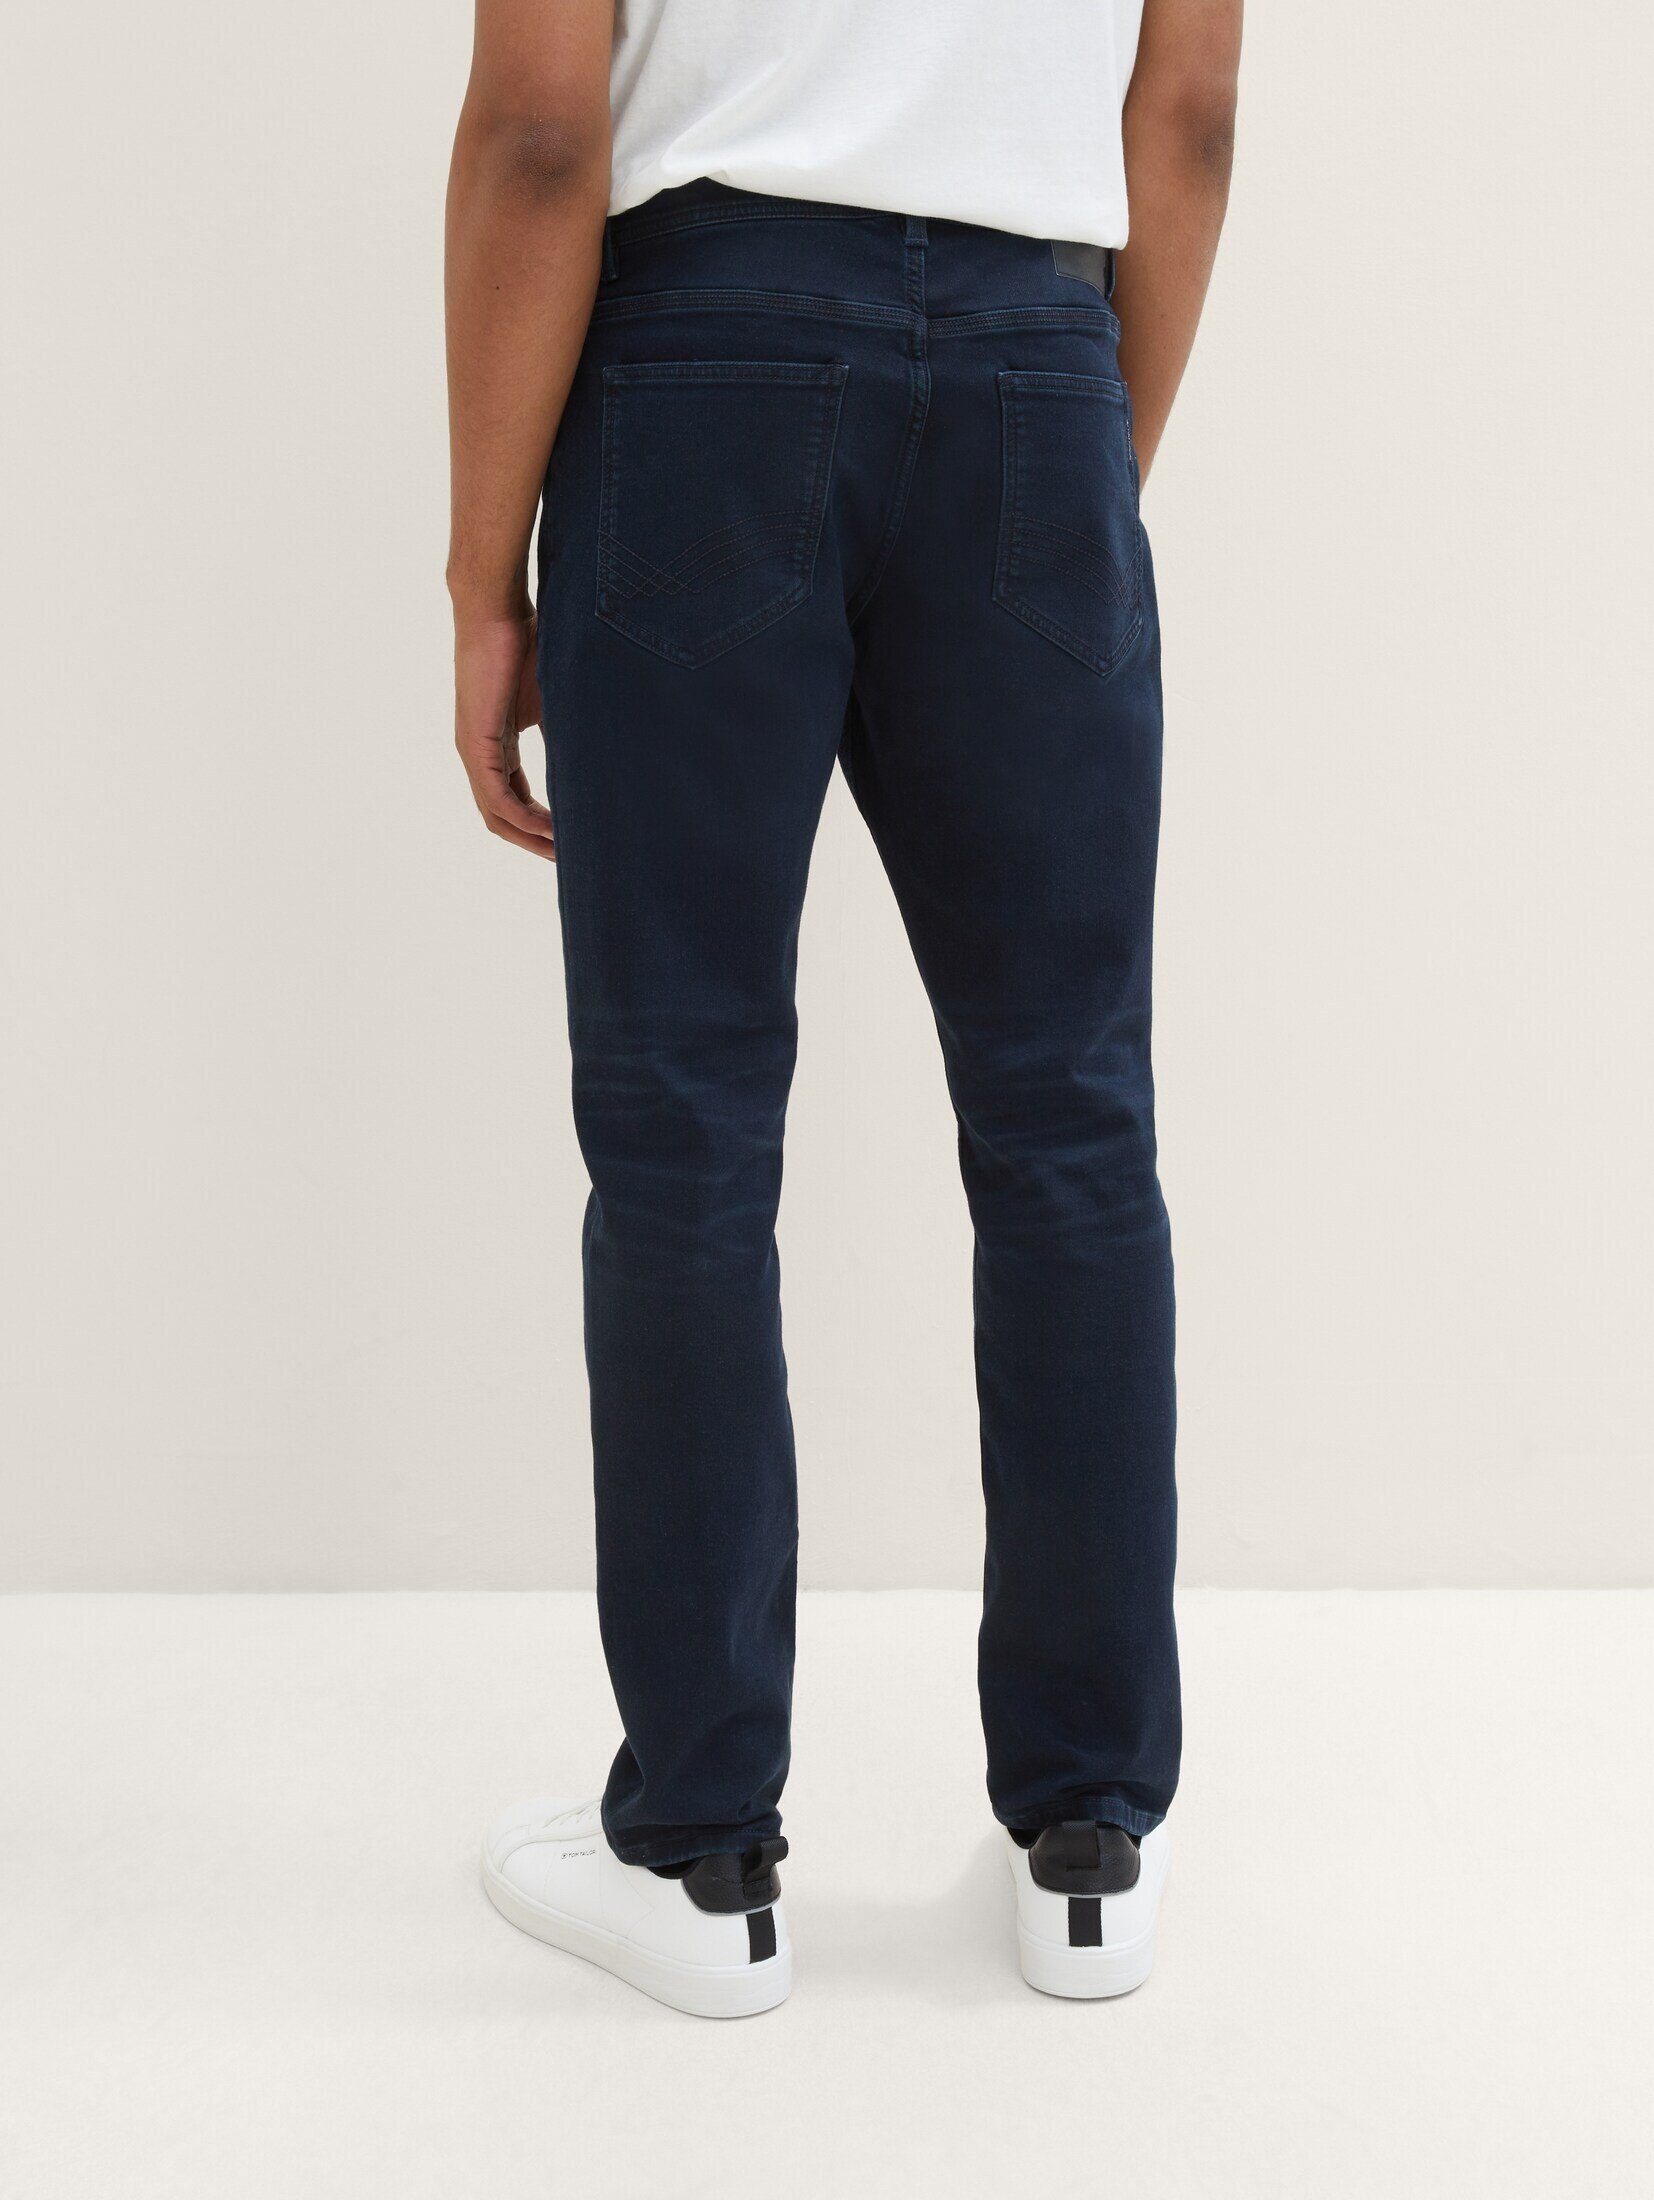 Josh TAILOR denim Slim Jeans TOM Regular black blue Straight-Jeans